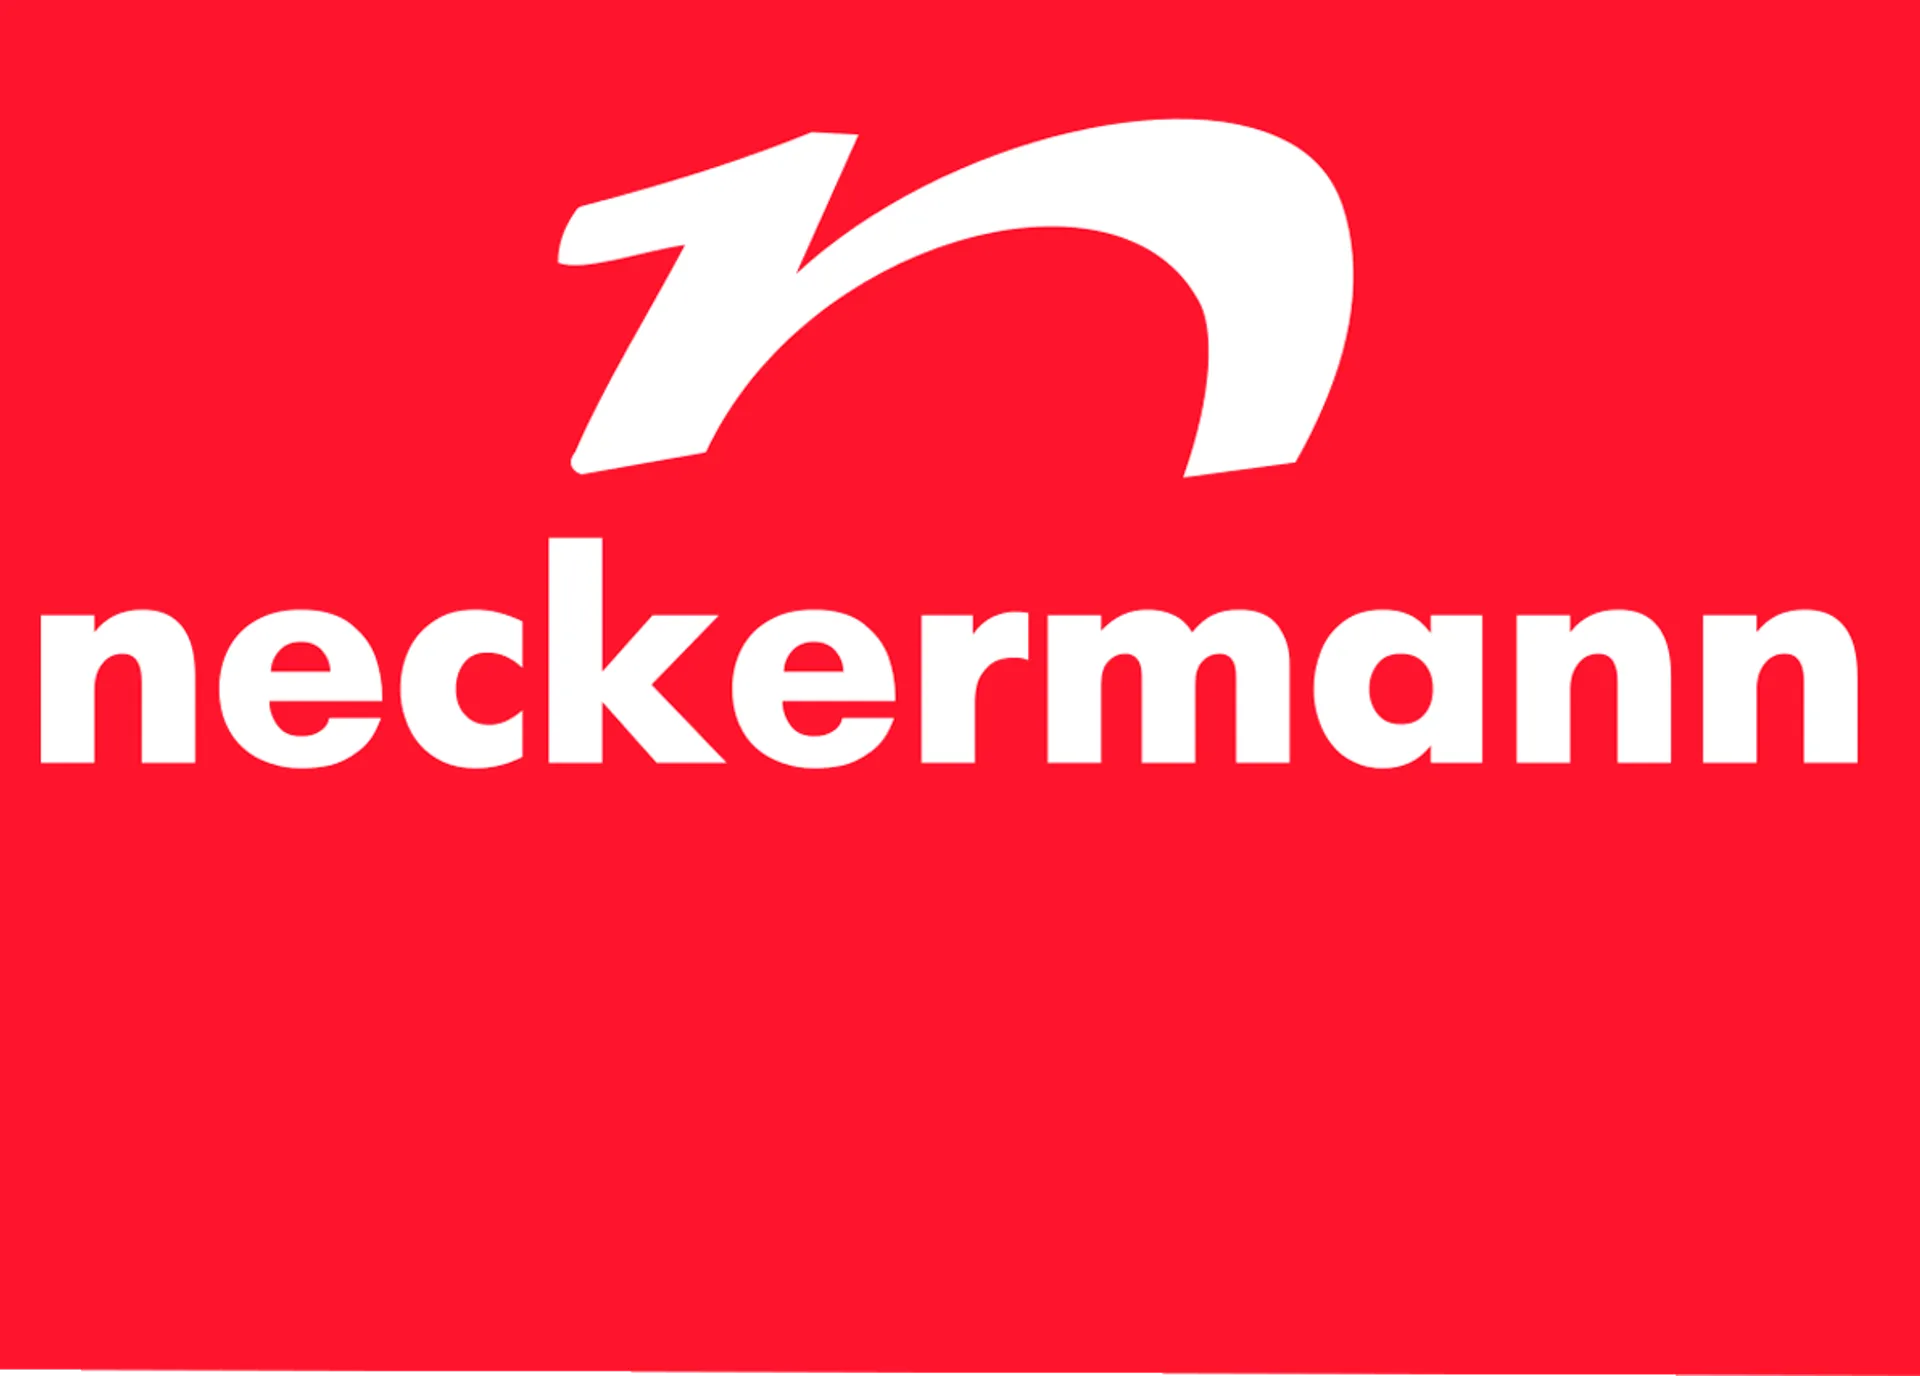 NECKERMANN logo die aktuell Flugblatt